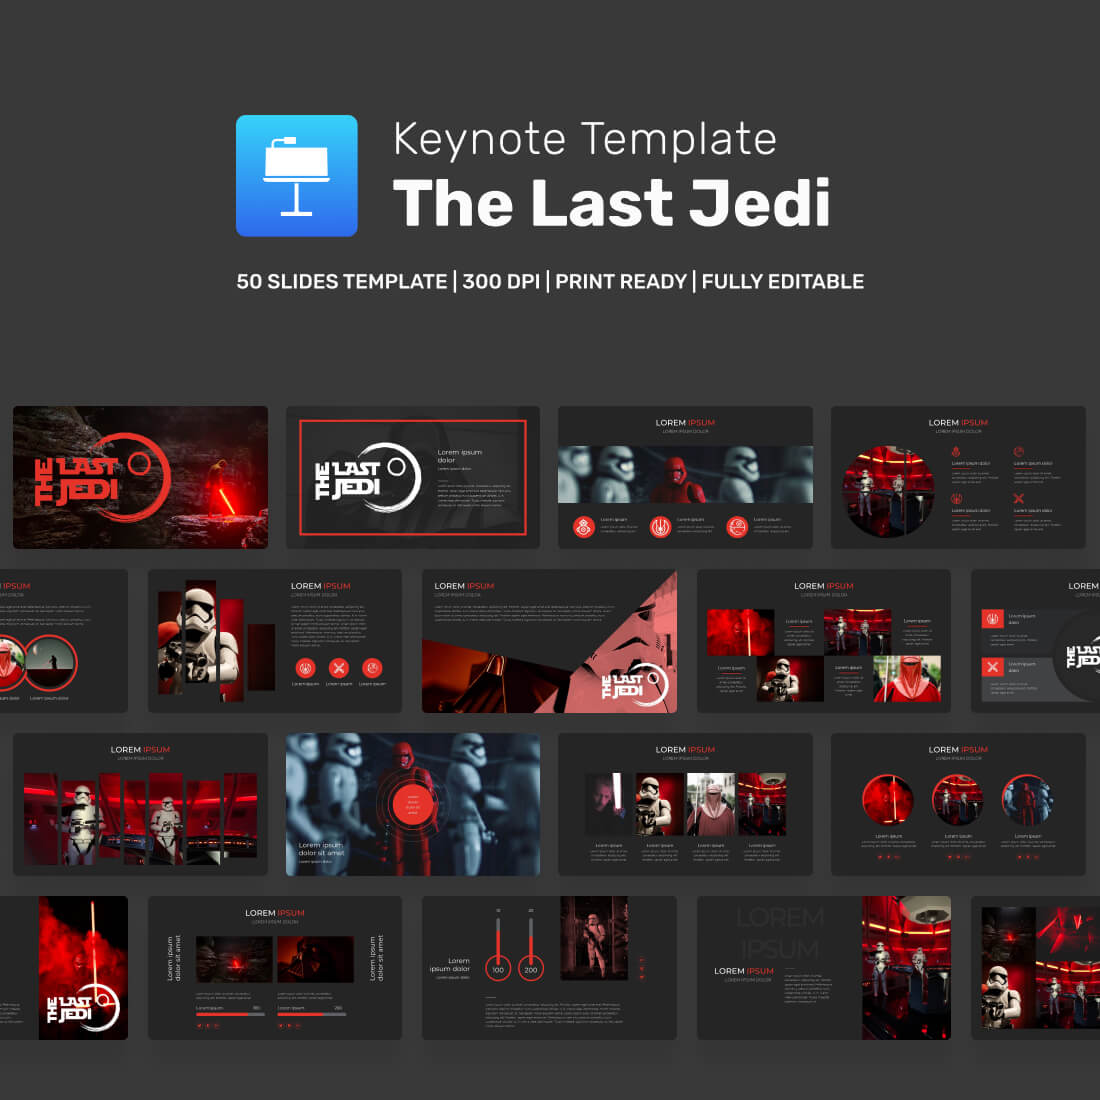 The Last Jedi Keynote Template cover.